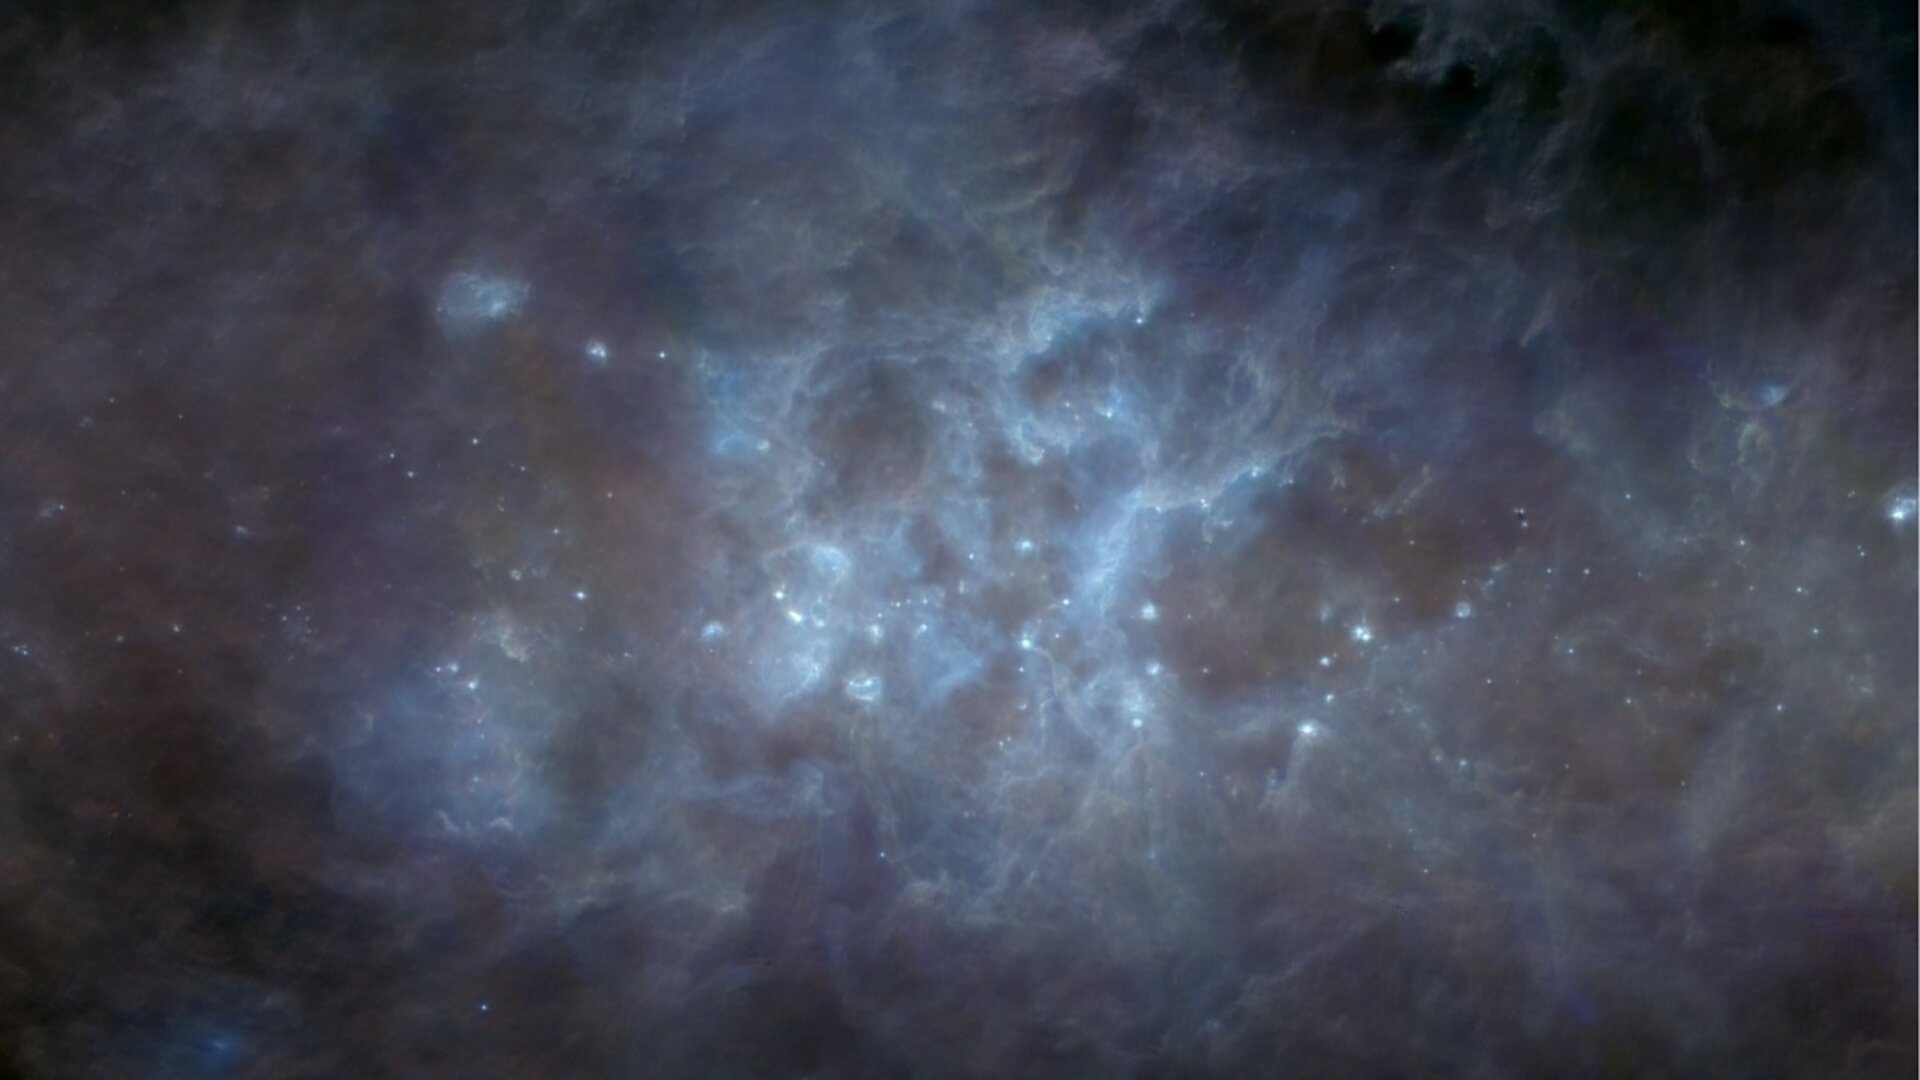 Akari view of the Cygnus region in the Milky Way